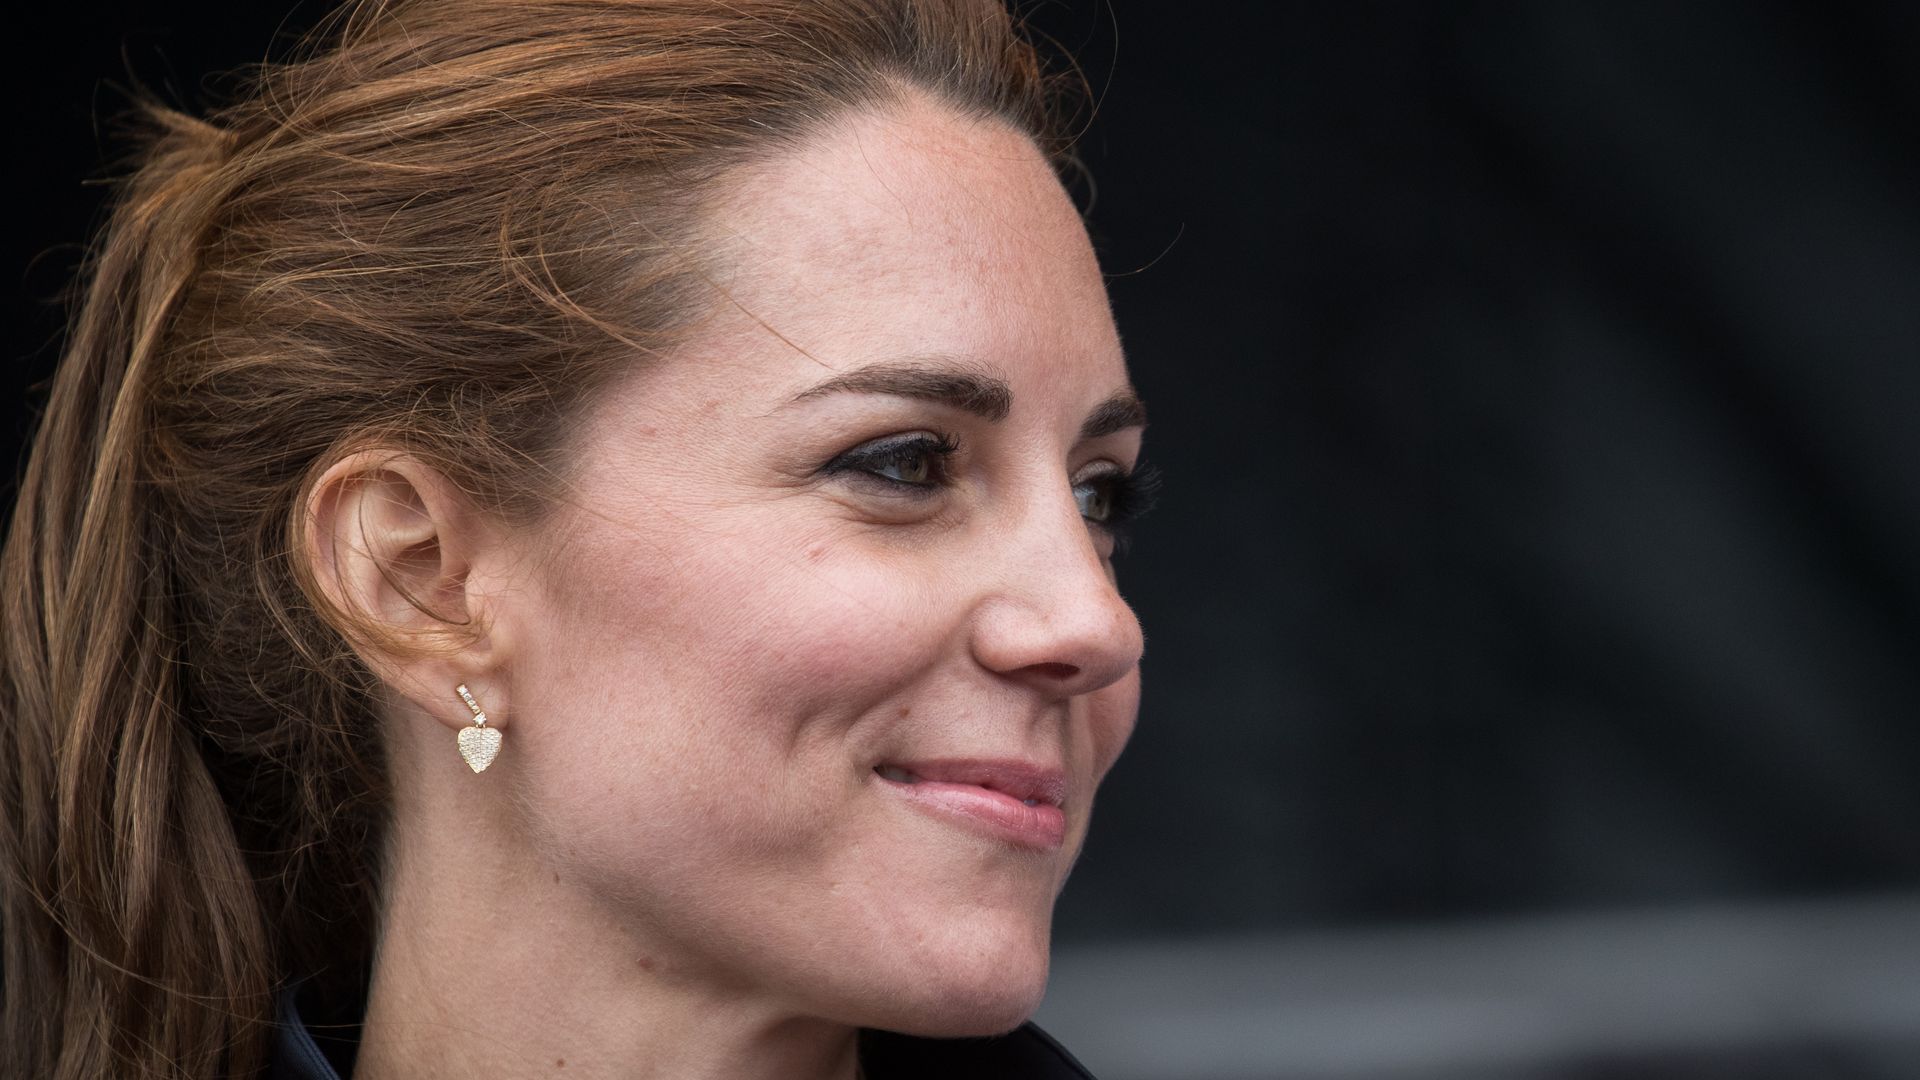 Princess Kate smiling in heart earrings